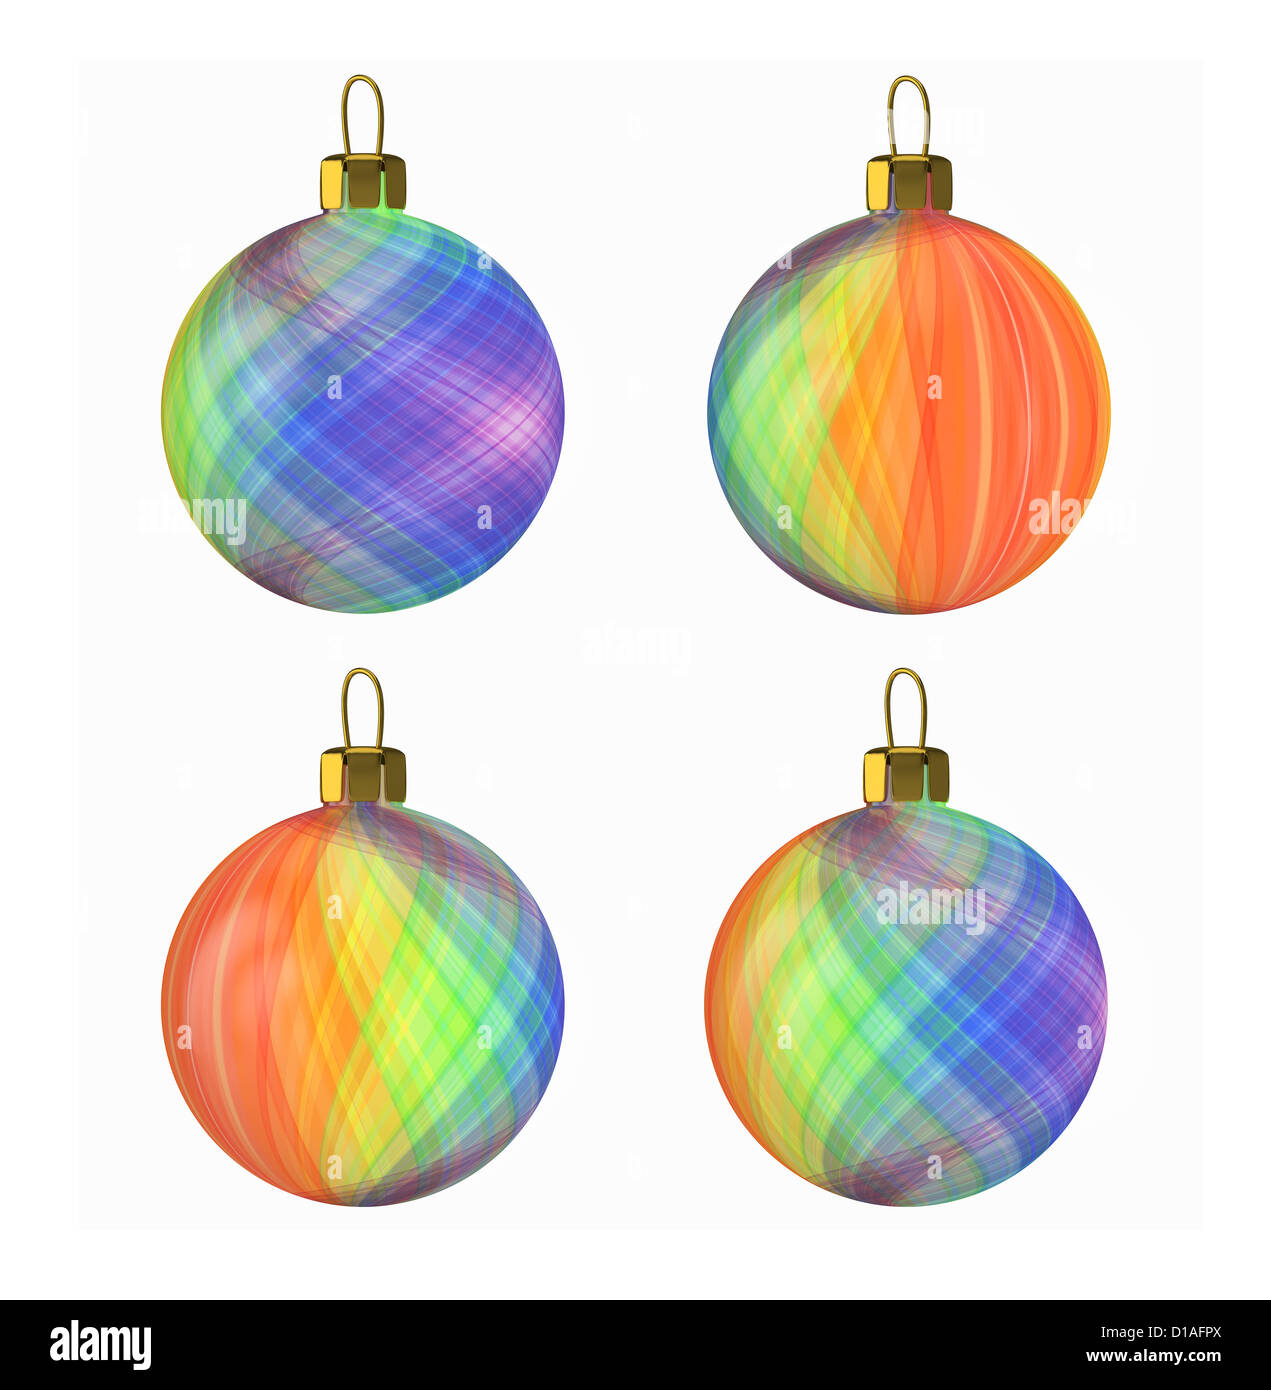 Christmas balls of various colors. Stock Photo